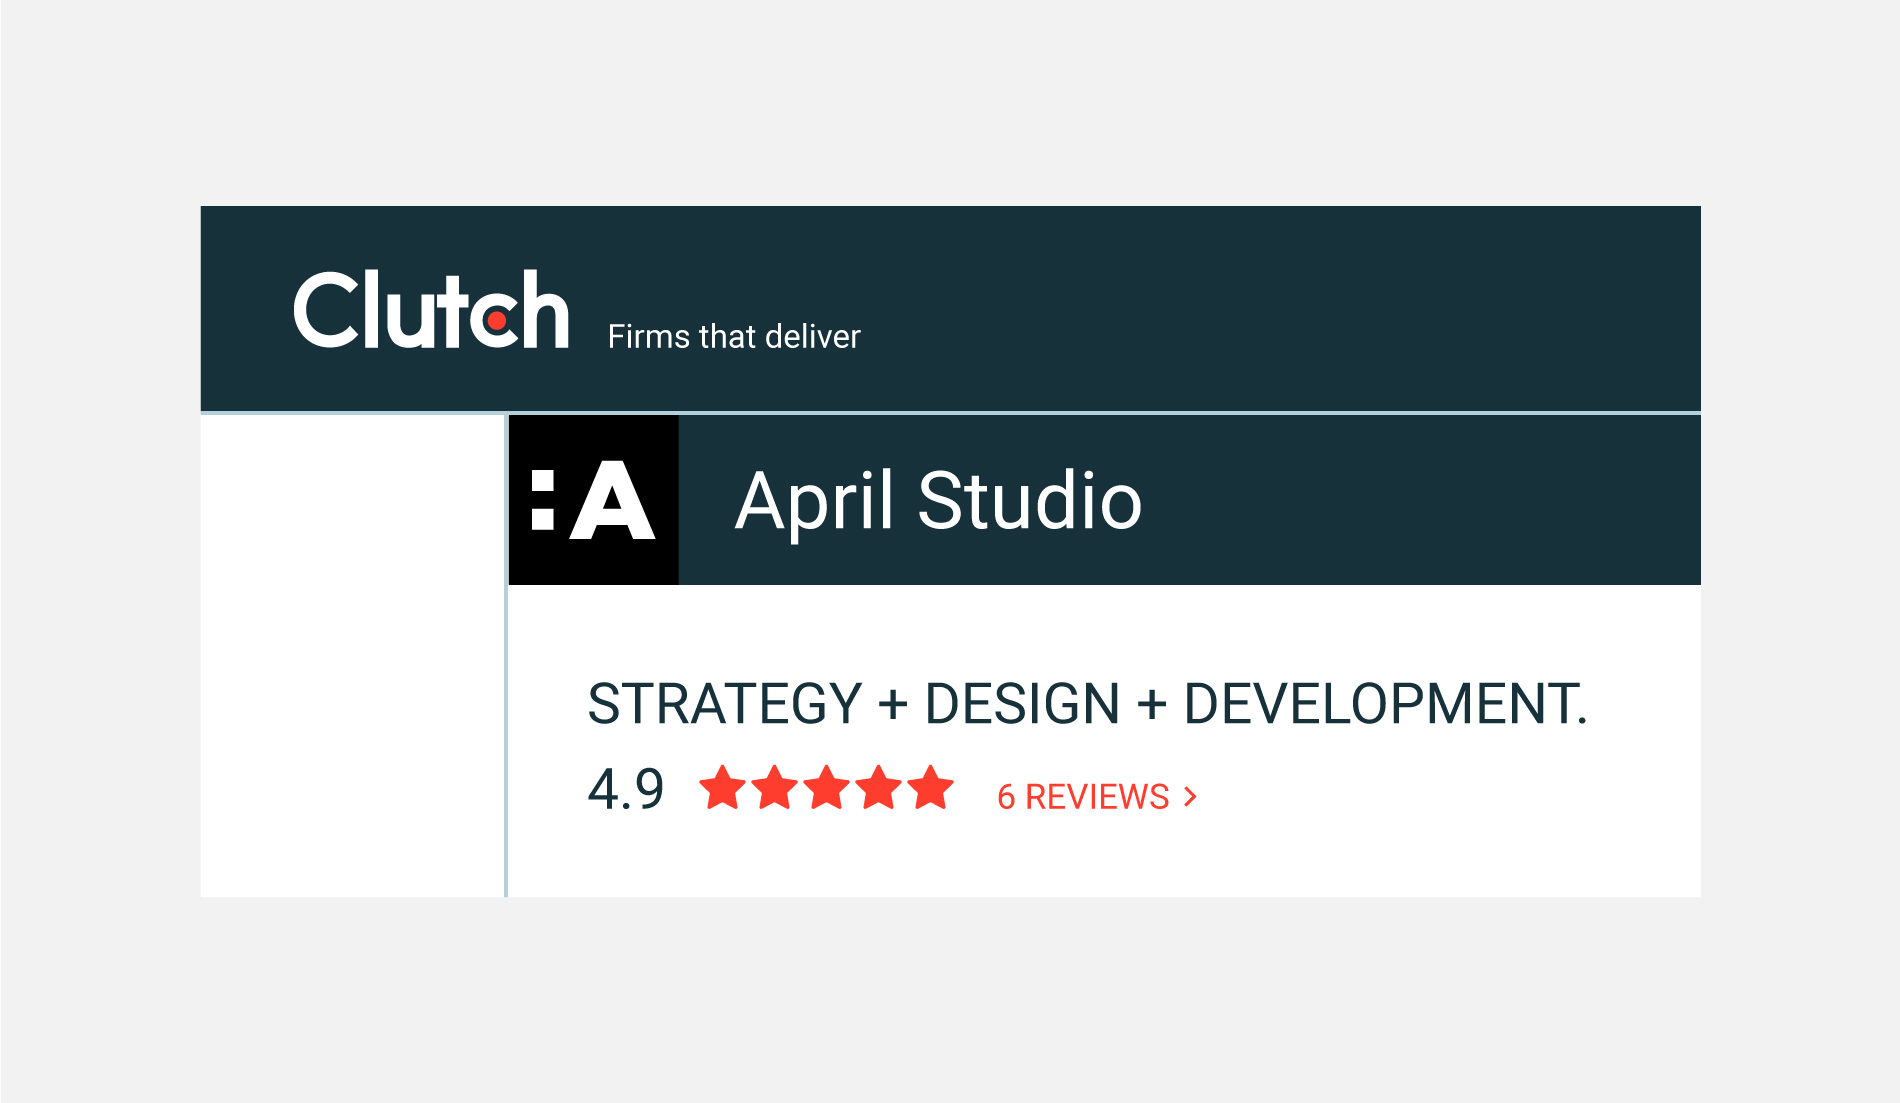 April Studio Showcases Top-Class Services & Debuts on Clutch 1